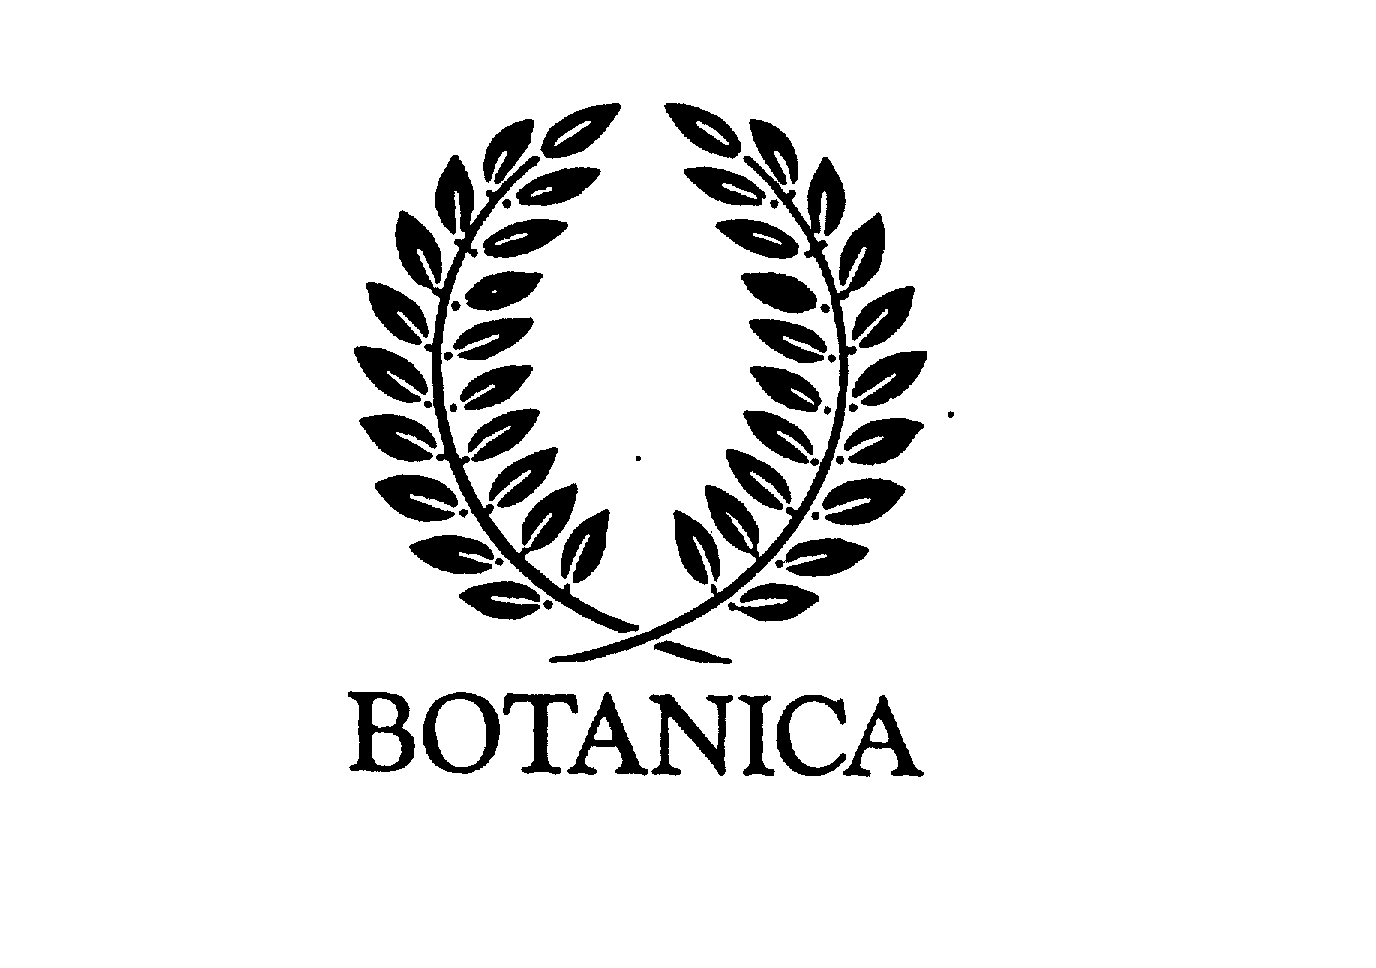 BOTANICA